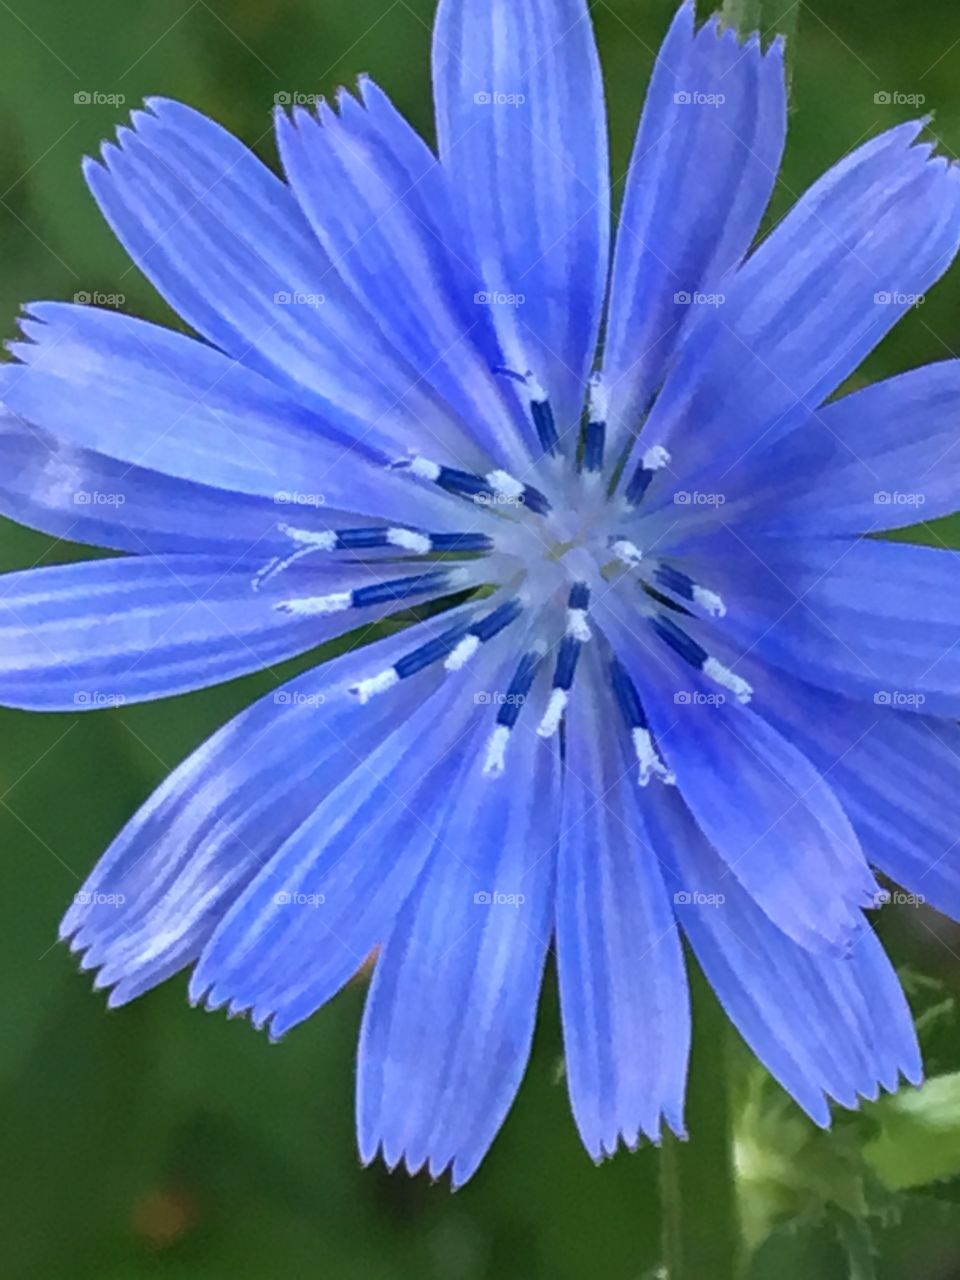 Blue flower - close up - details 